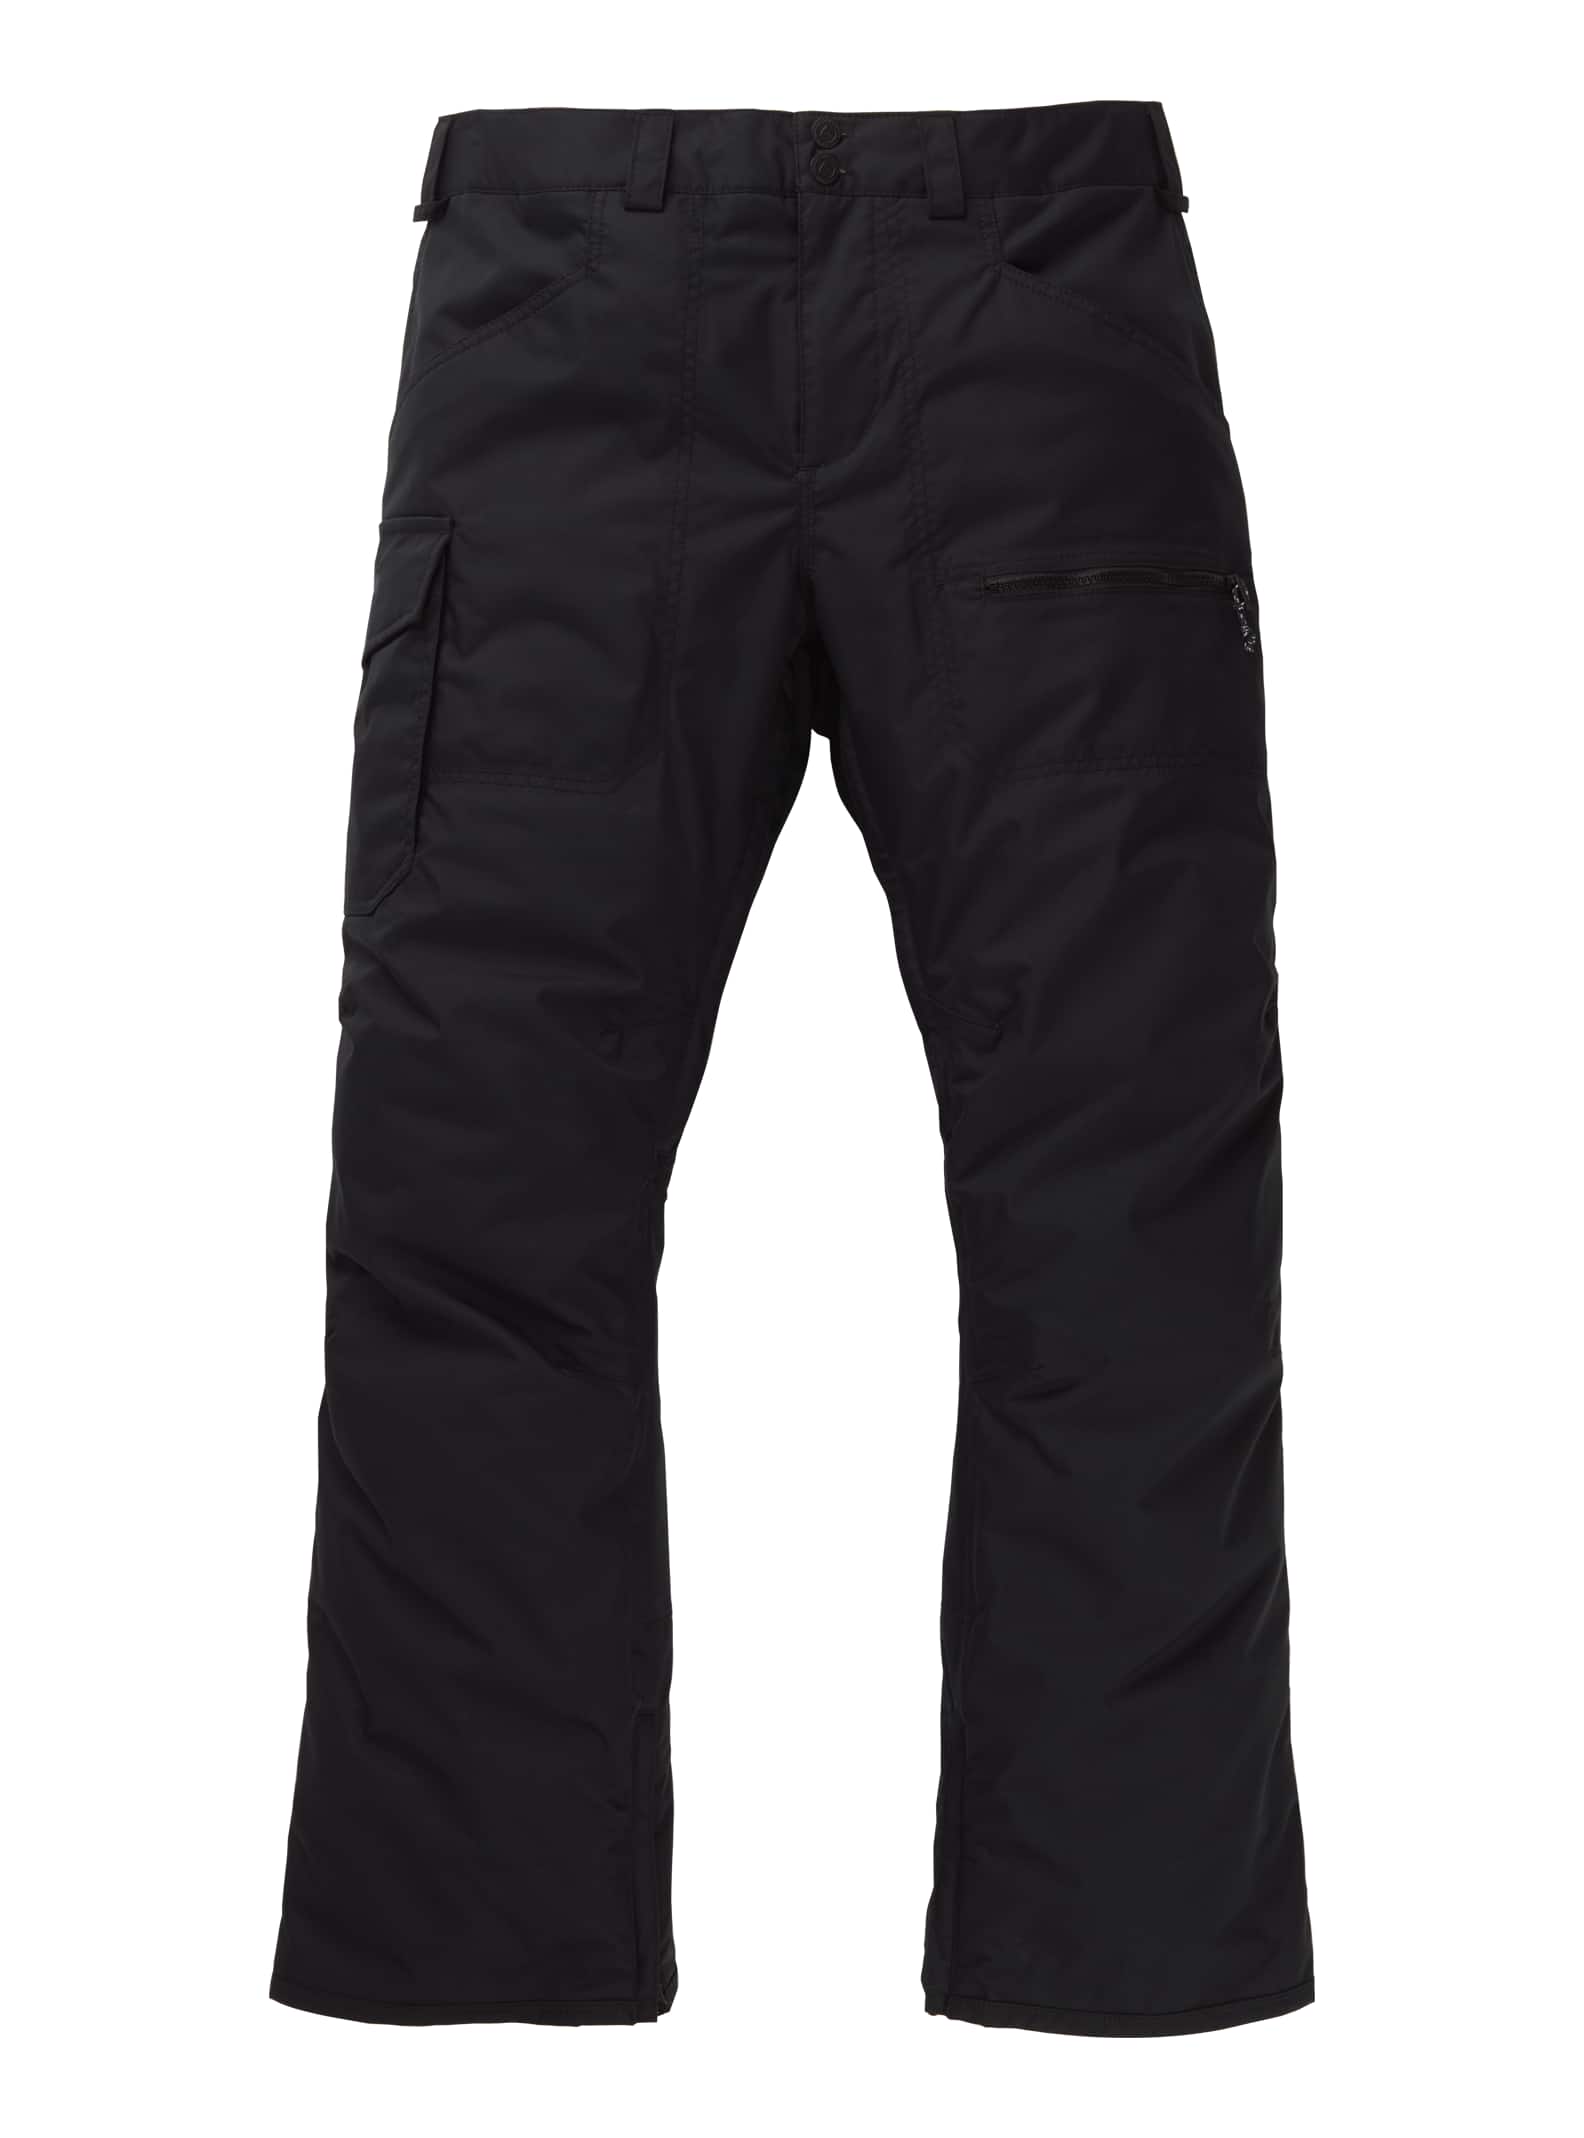 Men's Covert Insulated Pants   Burton.com Winter  US